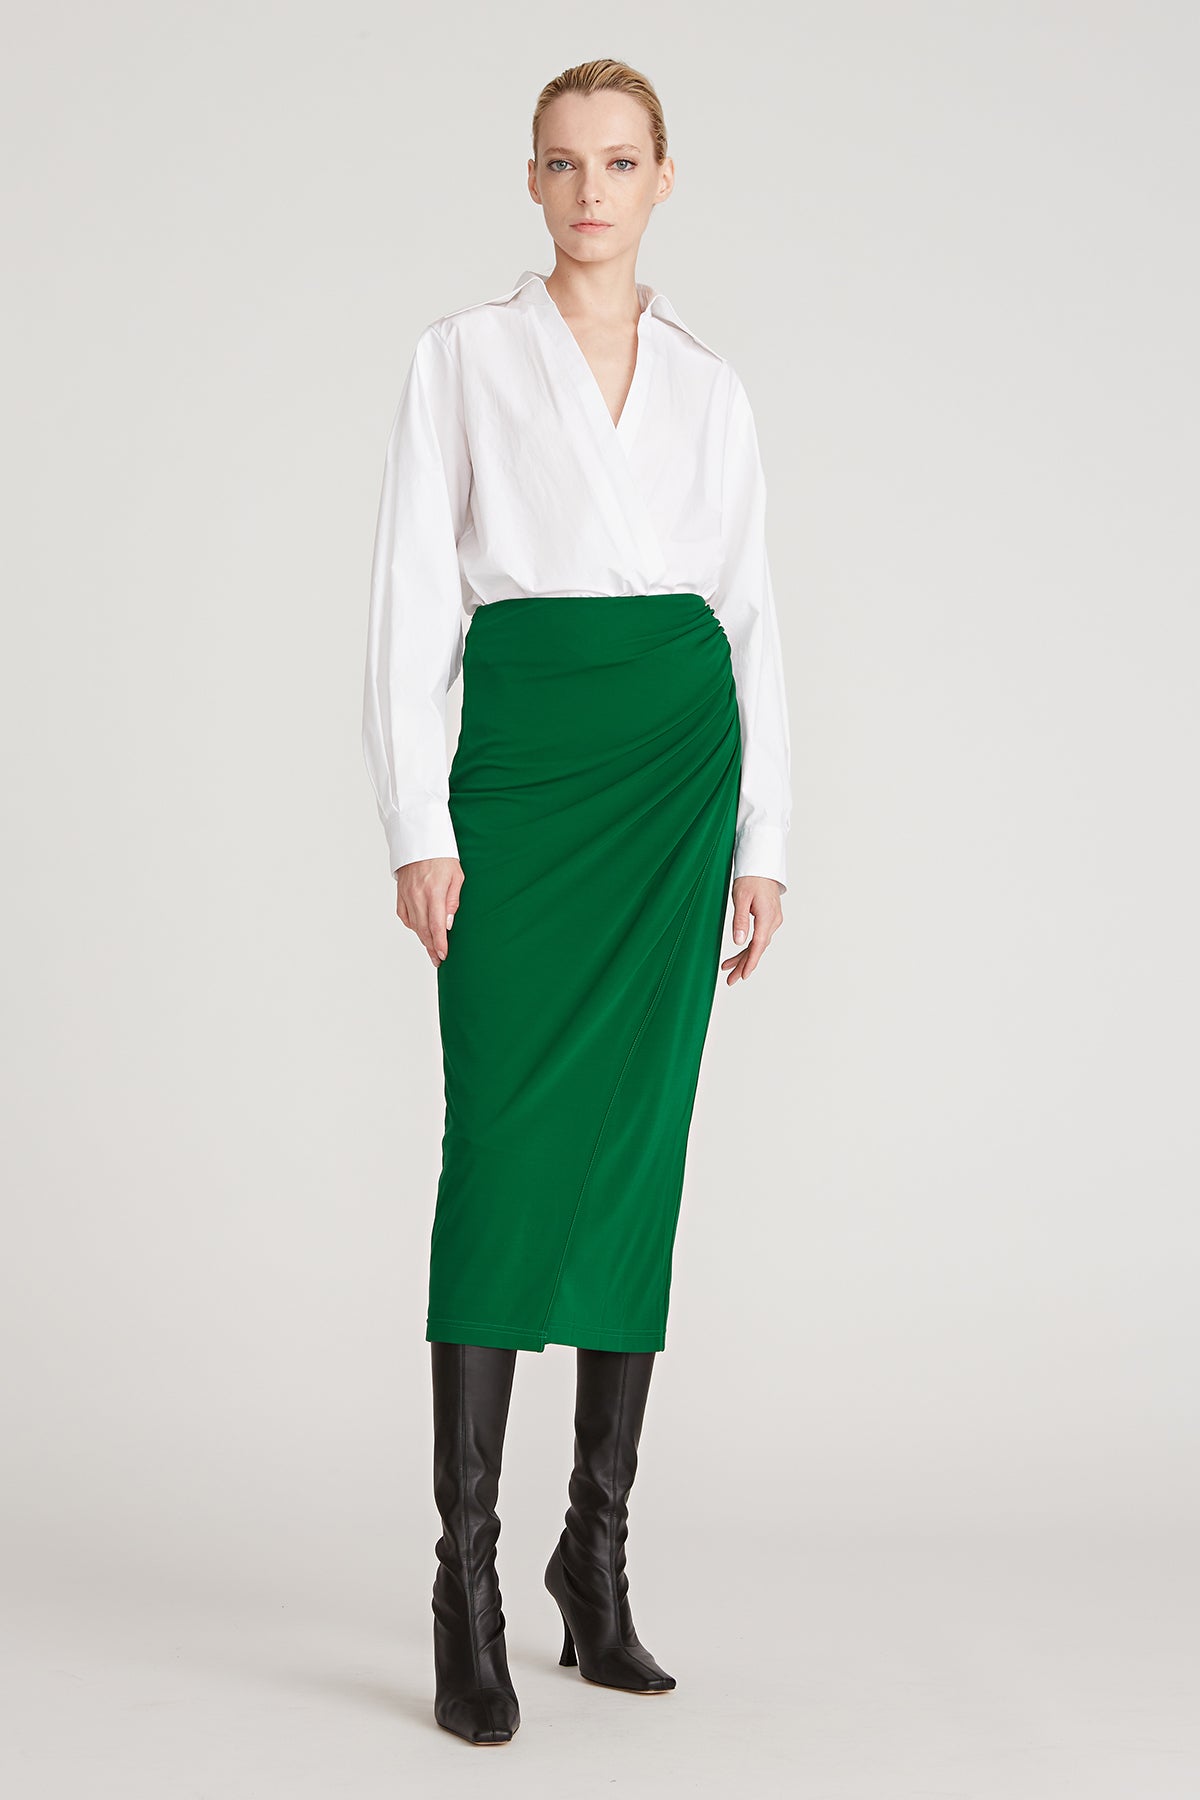 Halston - Halston - Isabella Silk Jersey Skirt in Jade